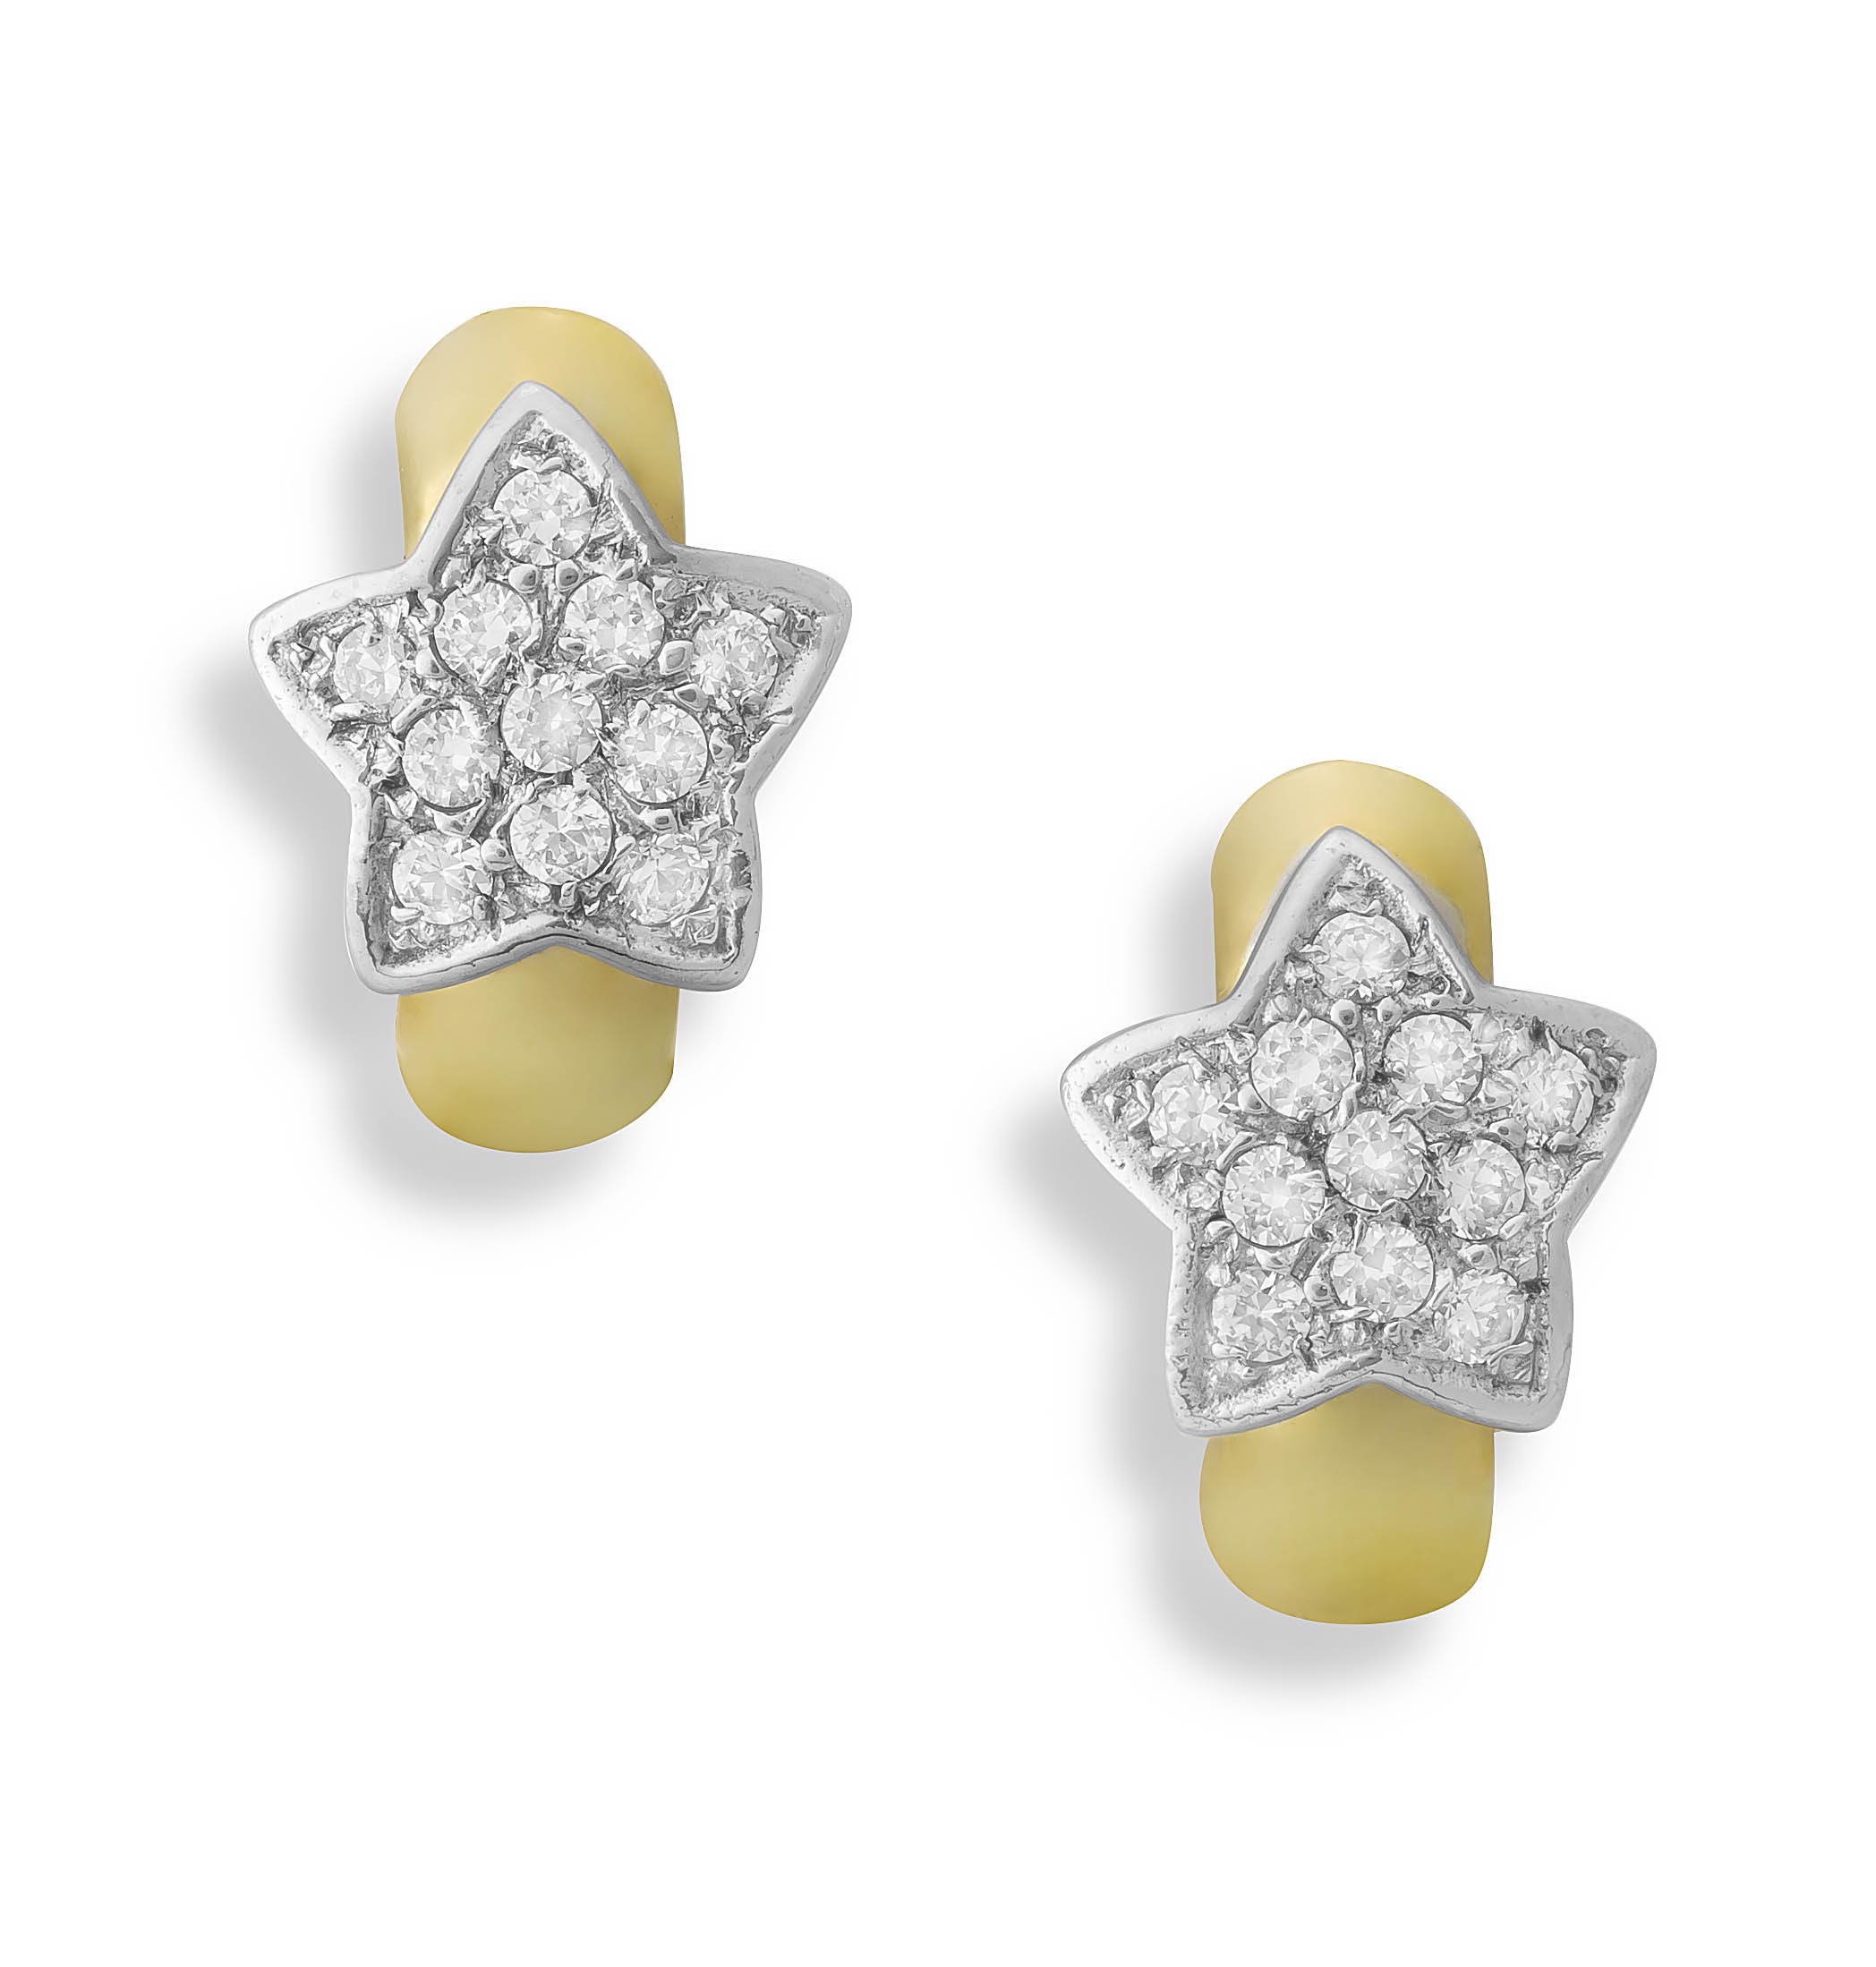 Pair of Italian diamond and 9ct gold earrings